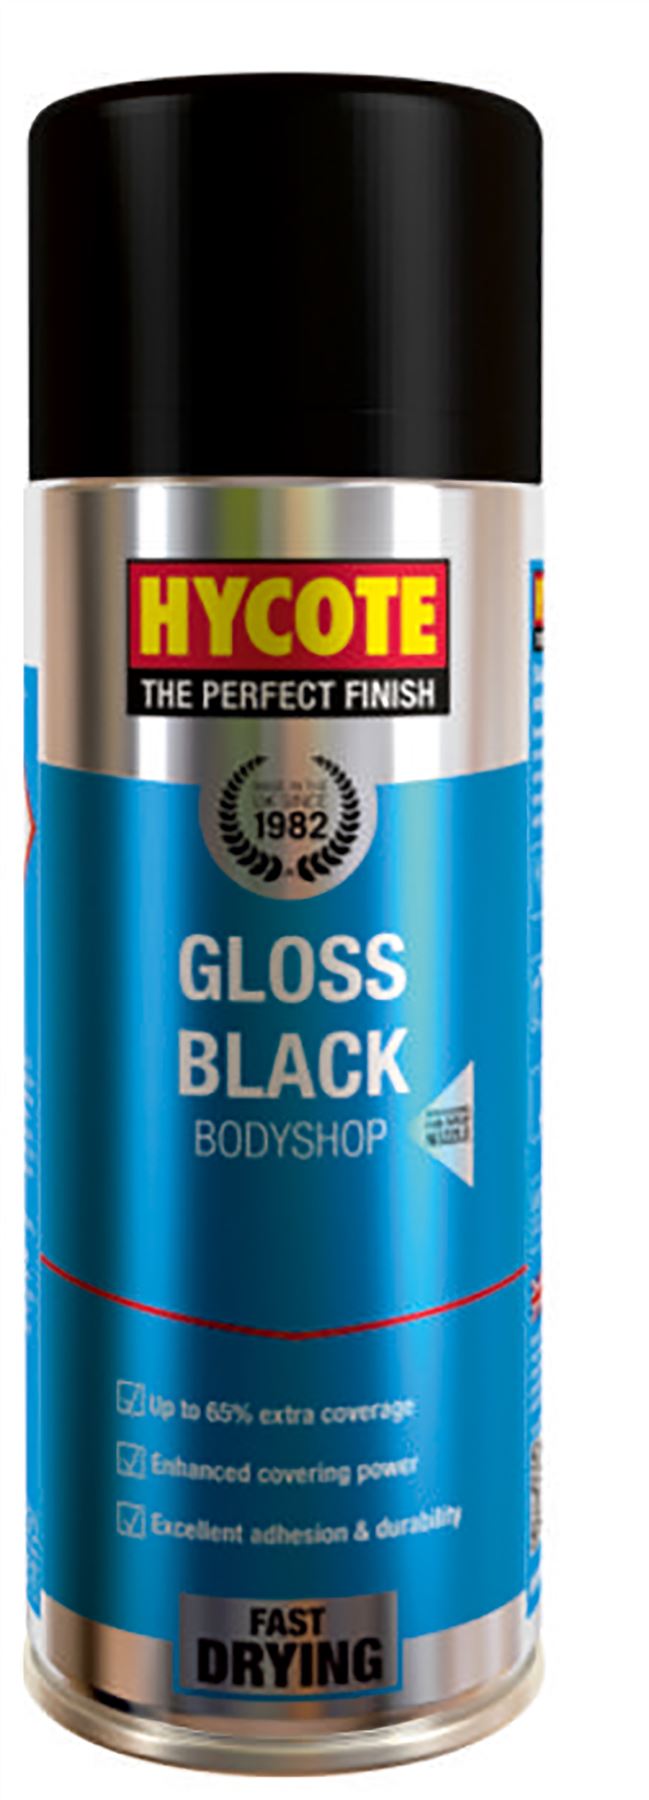 Hycote Bodyshop Gloss Black Paint - 400ml